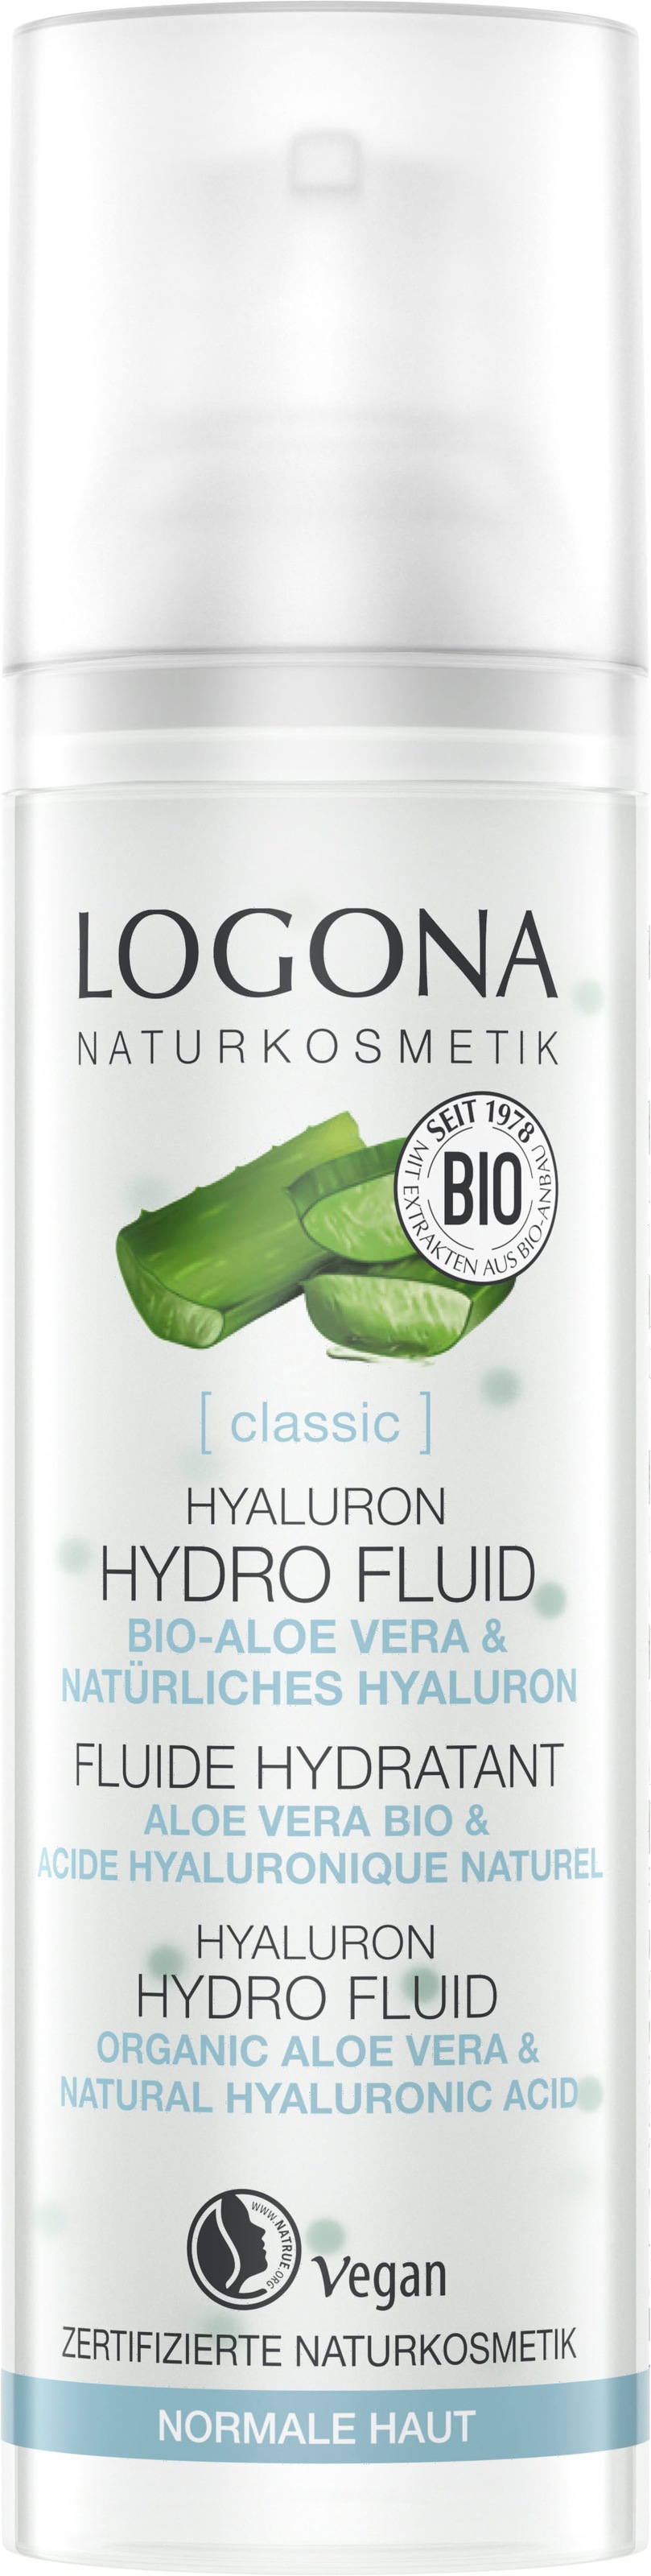 LOGONA Gesichtsfluid Fluid« online kaufen »Logona BAUR Hyaluron classic Hydro 